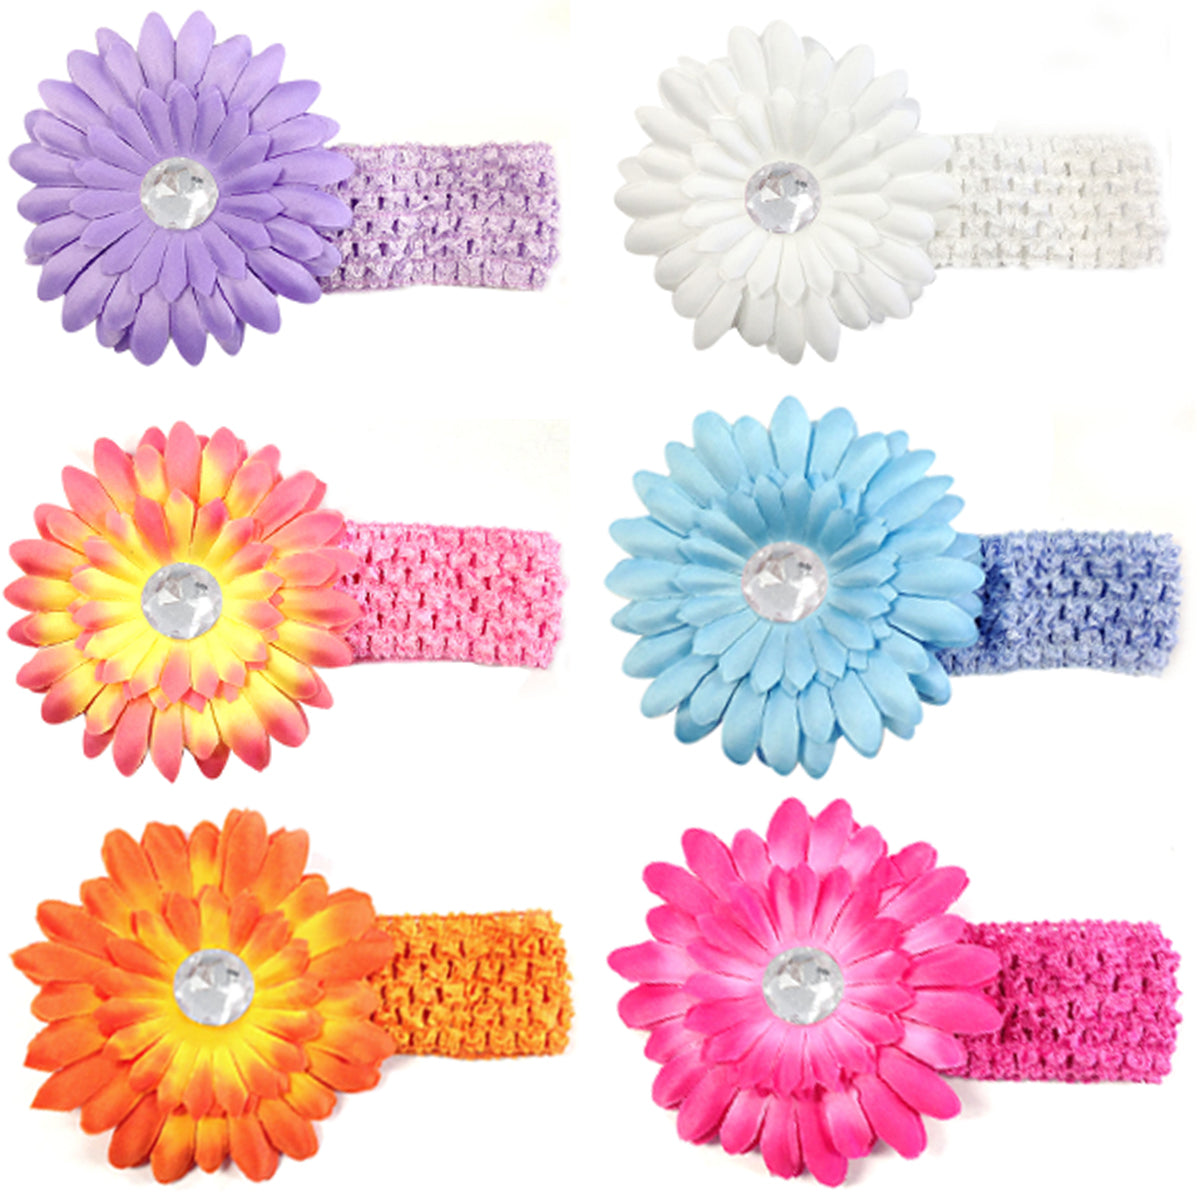 Kella Milla Assorted Gerber Daisy Flower Hair Clips With Soft Stretchy Crochet Baby Headbands (24 Pack, 12 Flowers + 12 Headbands)